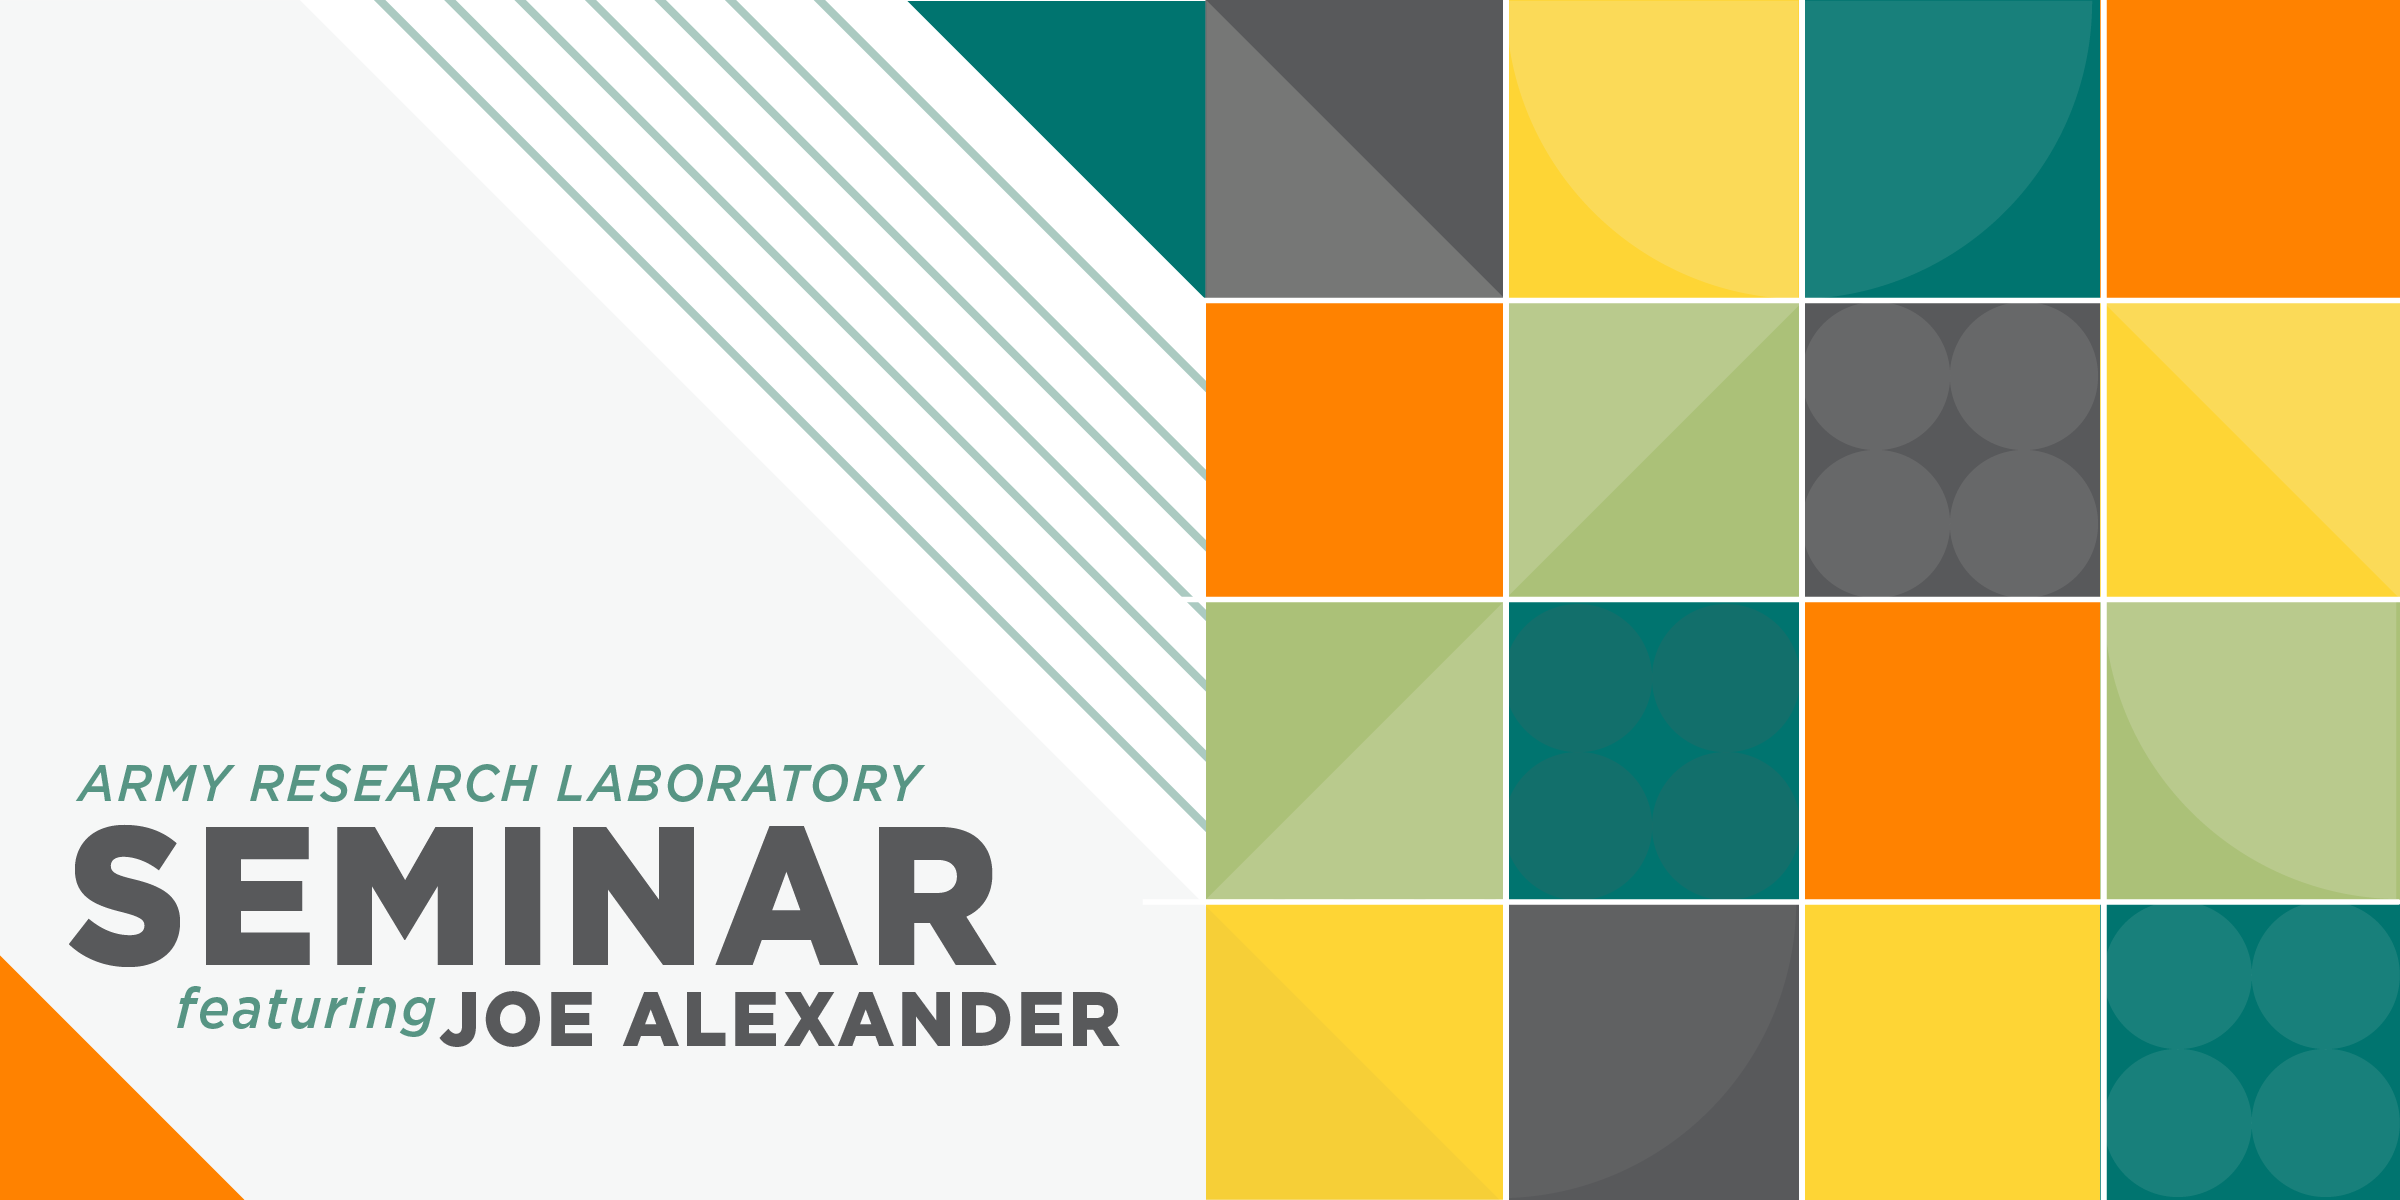 Army Research Laboratory Seminar featuring Joe Alexander Header